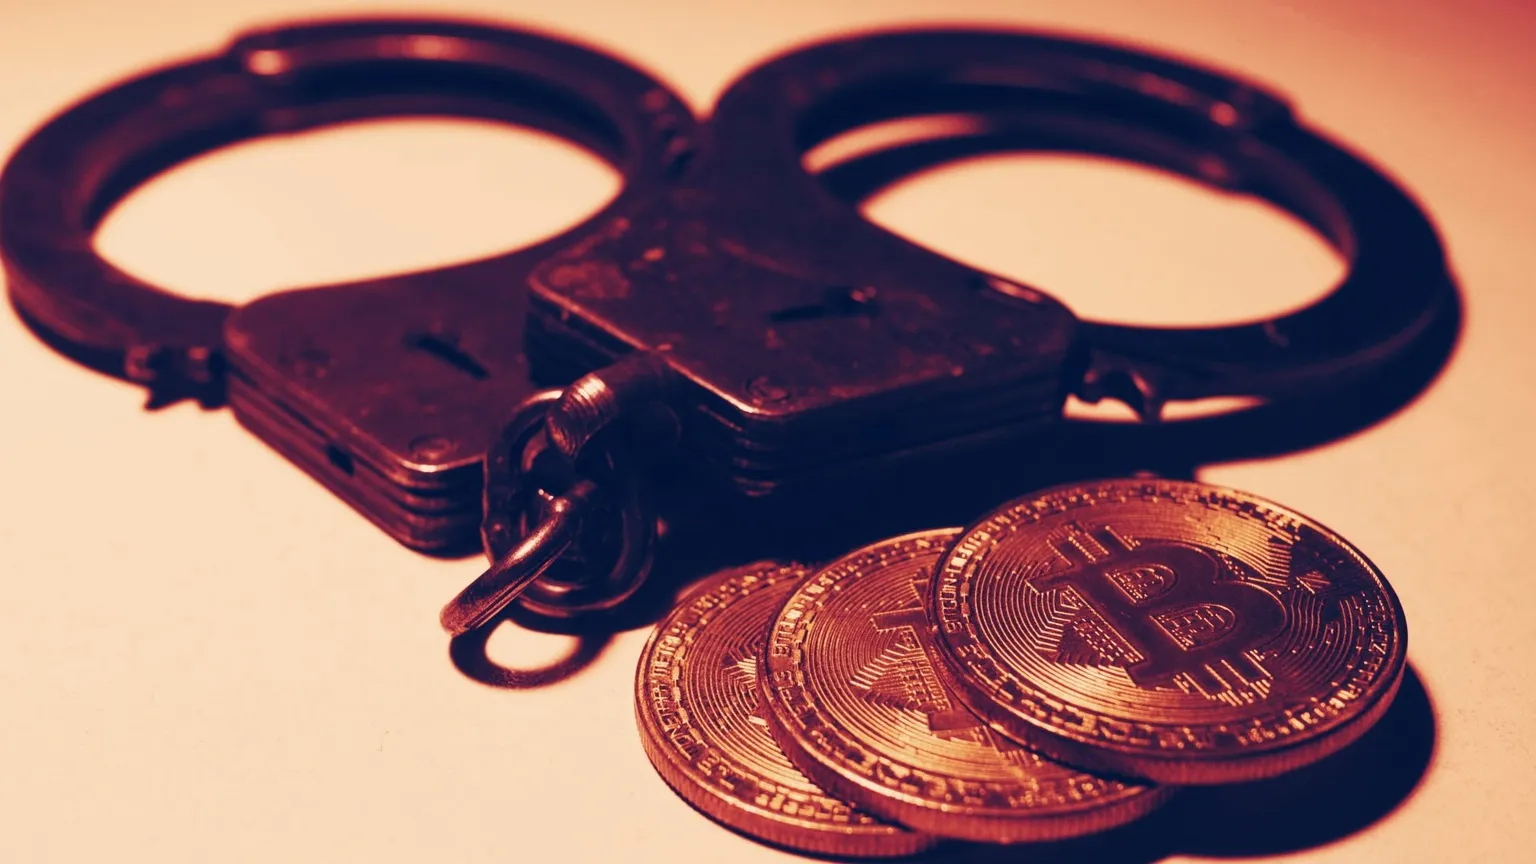 El presunto jefe de la presunta estafa ponzi, BitClub, ha sido arrestado por cargos sexuales. Imagen: Shutterstock